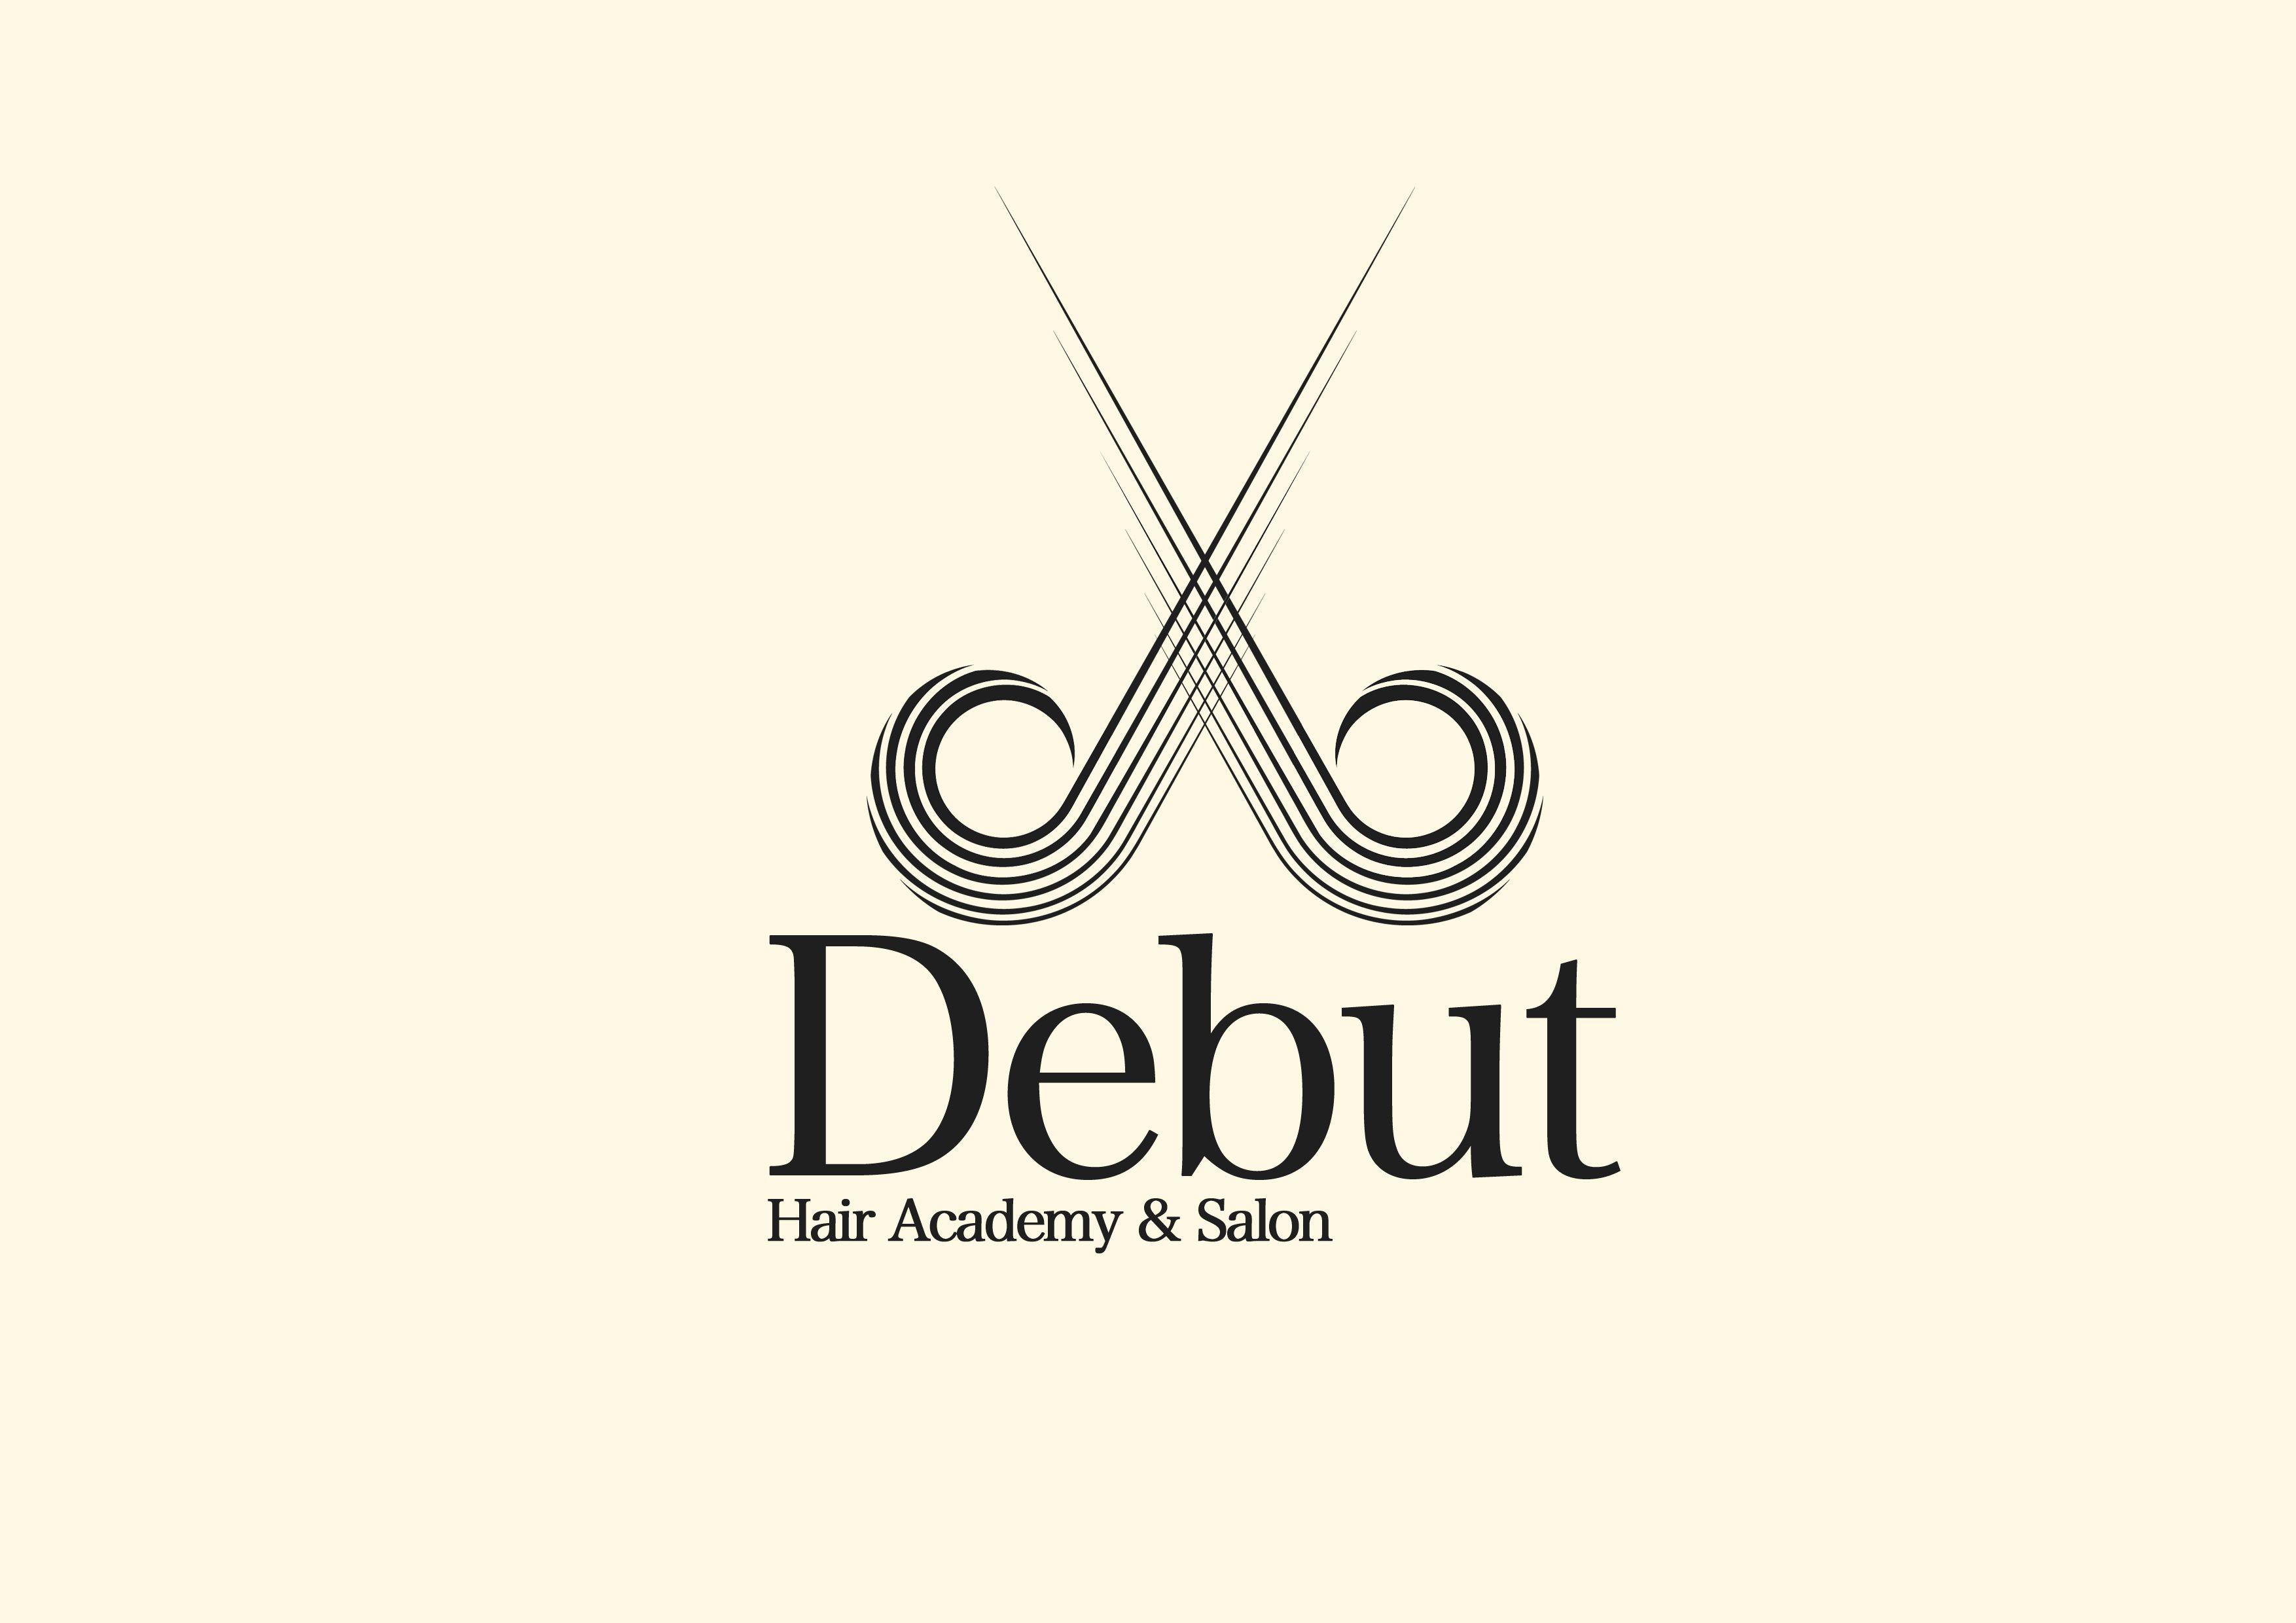 Hair Logo - Hair Logo Design for Debut Hair Academy & Salon by REX. Design